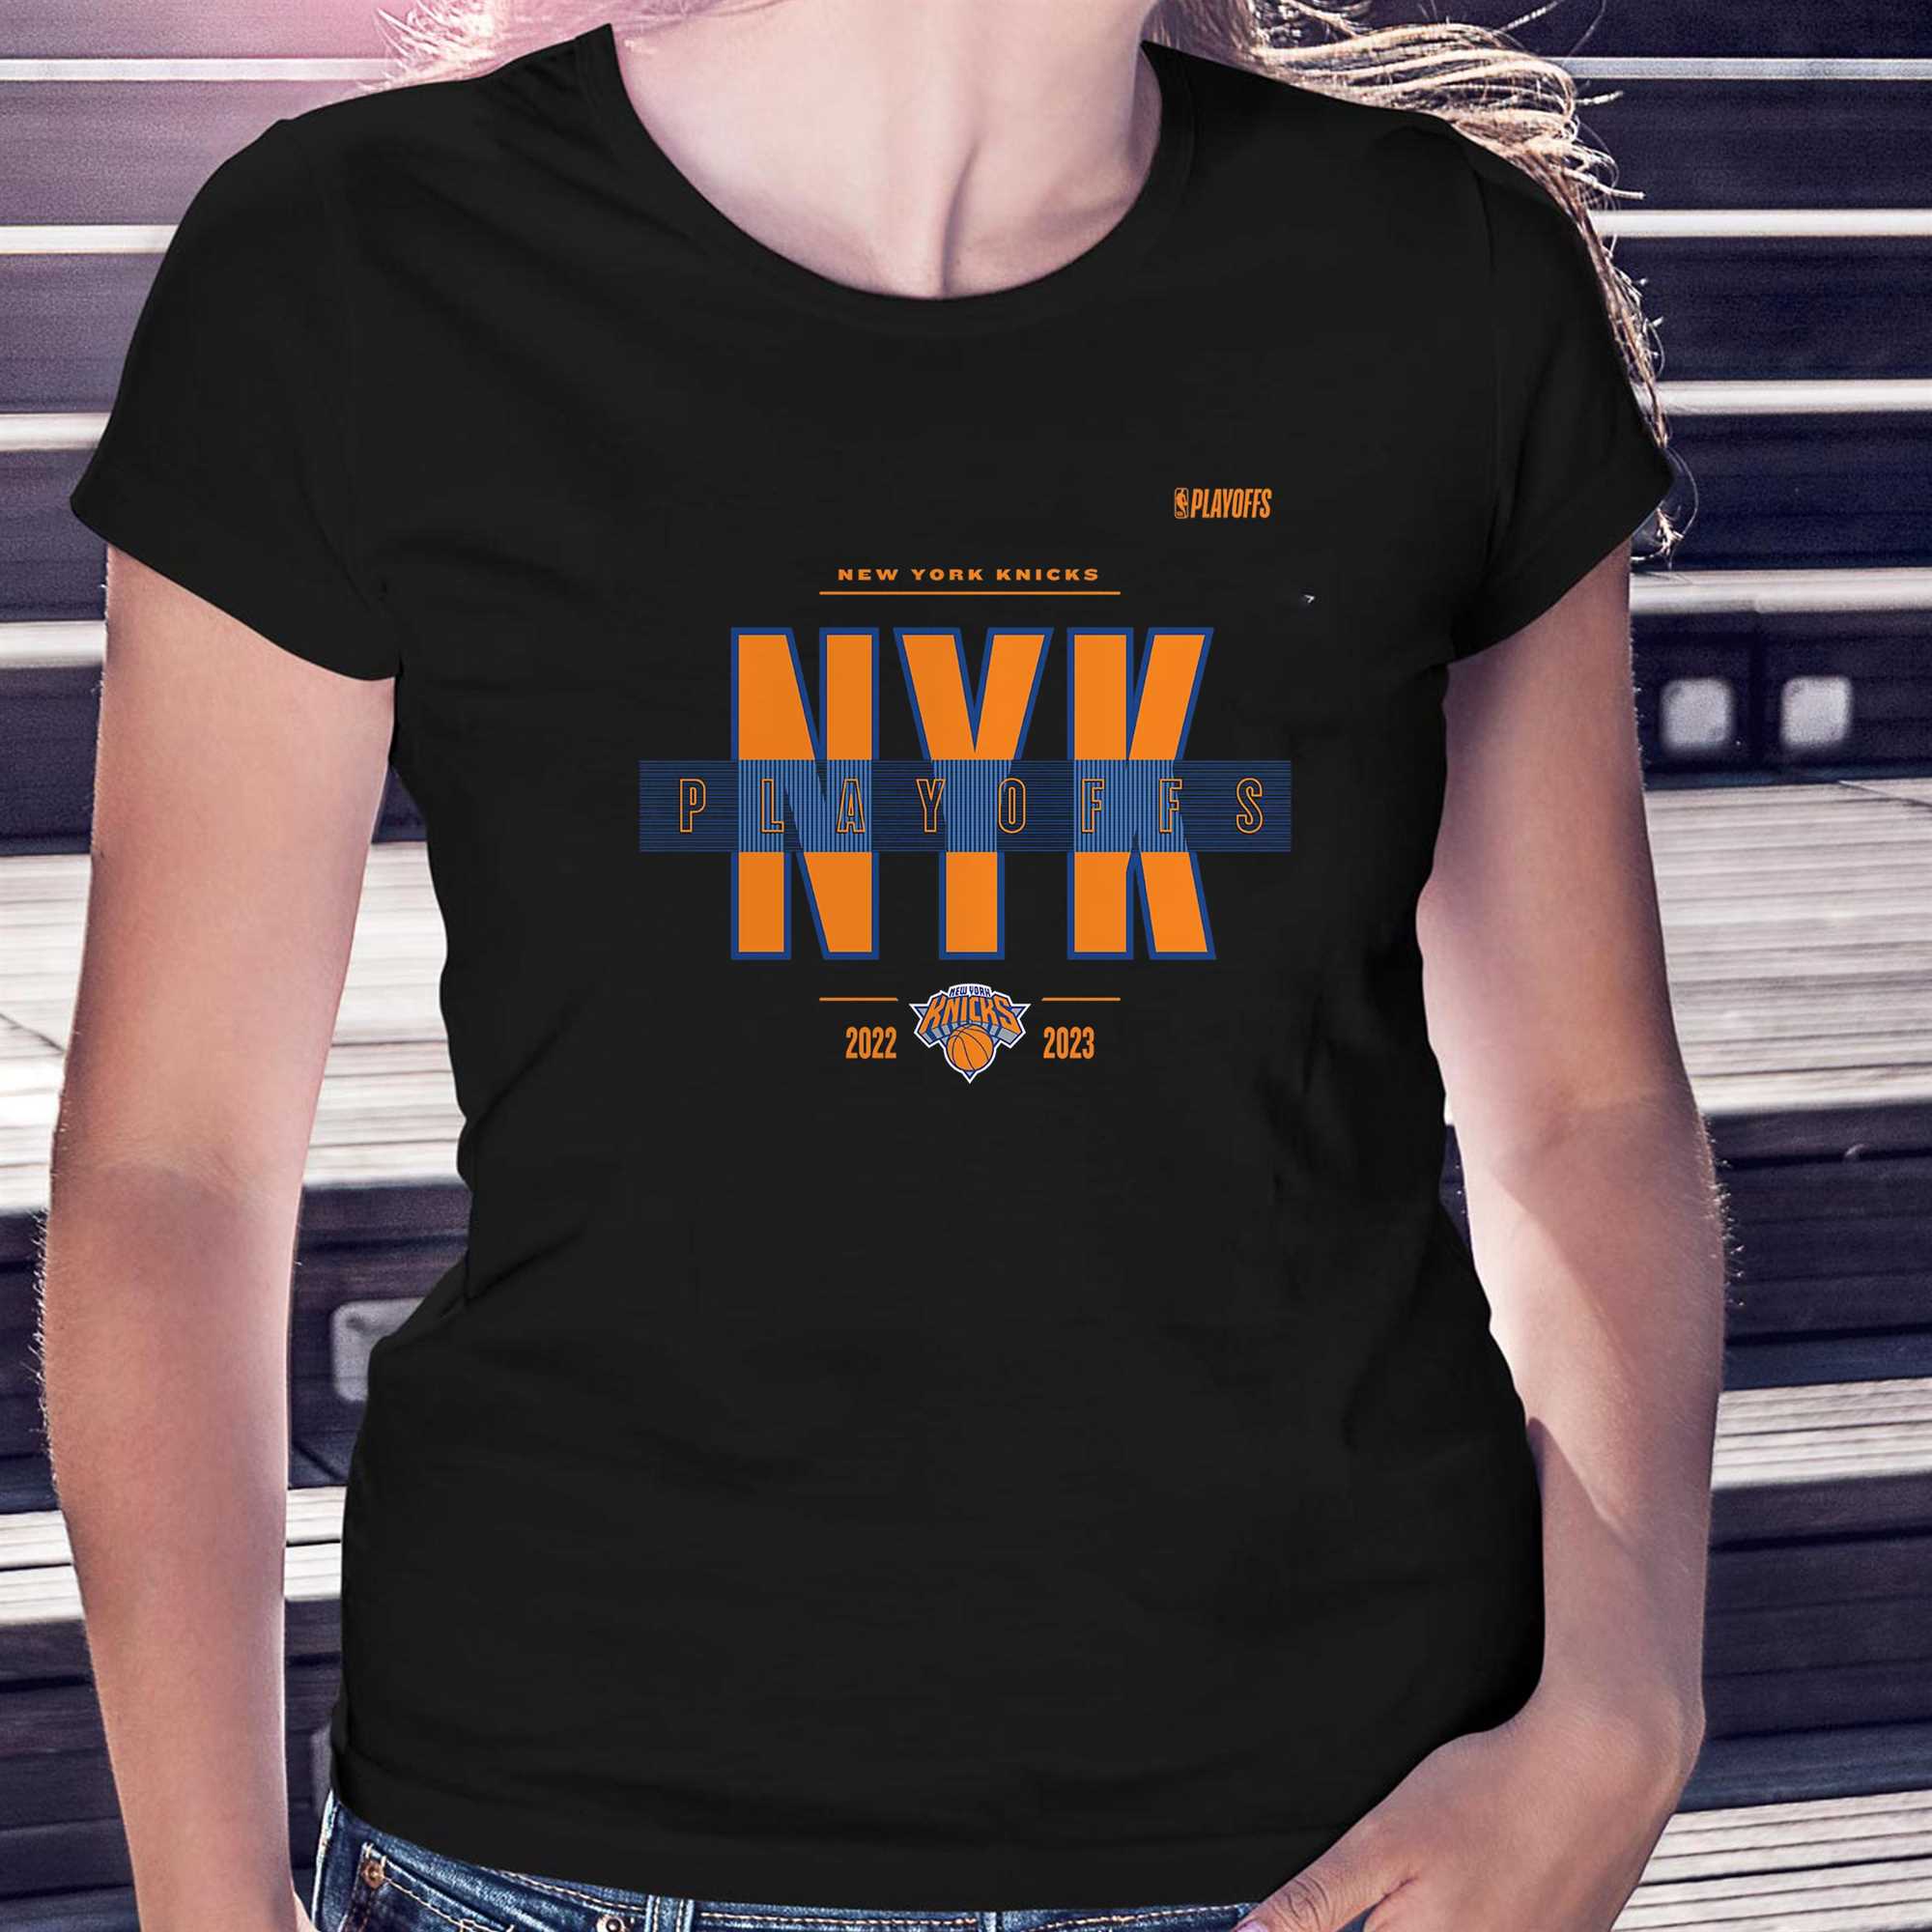 New York Knicks Playoff Merchandise, Knicks Jersey, Knicks Apparel